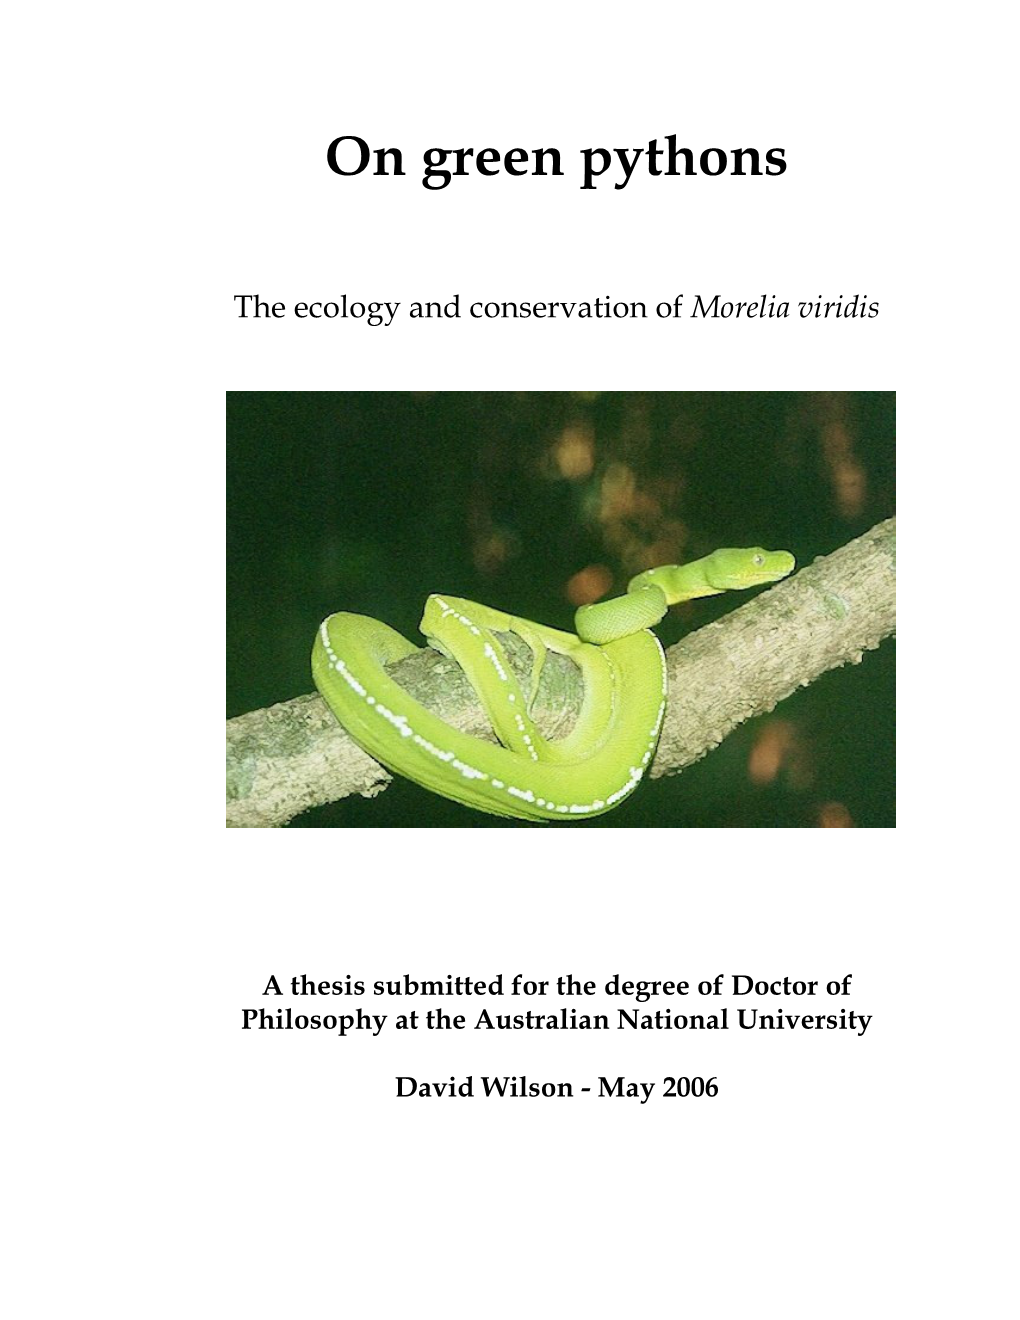 On Green Pythons